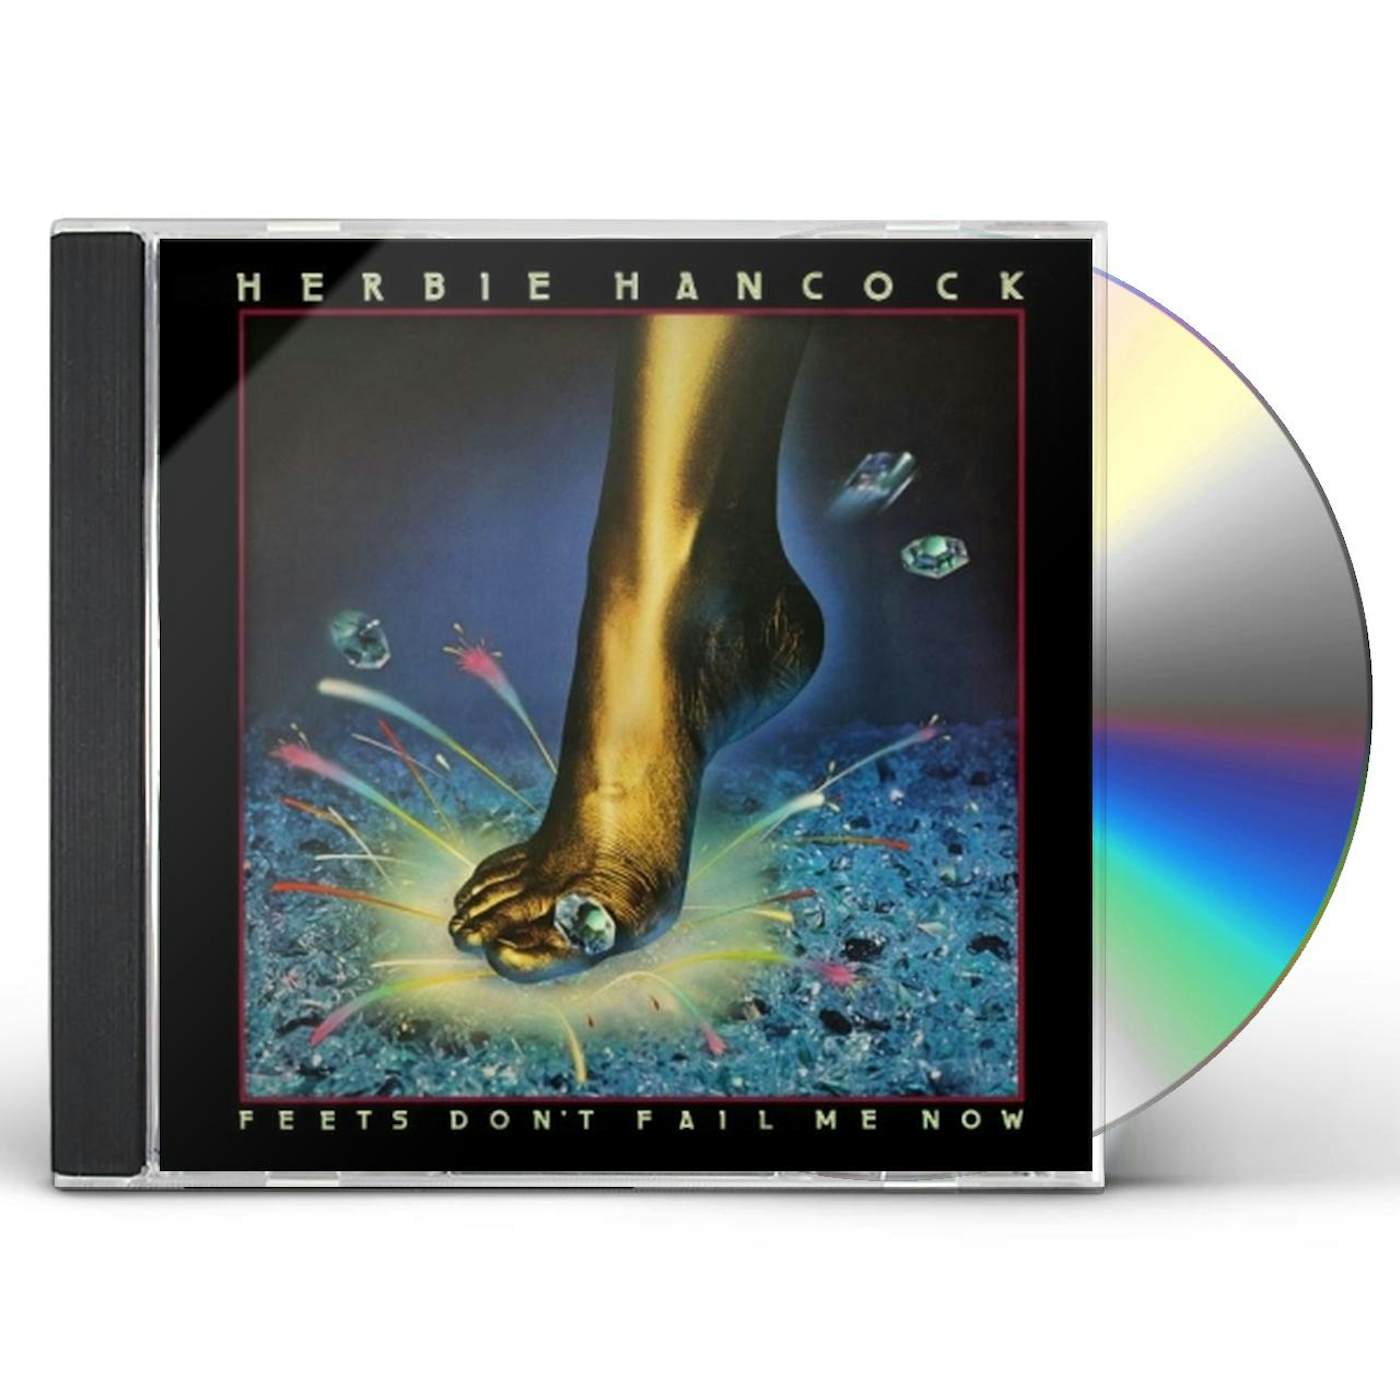 Herbie Hancock FEET'S DON'T FAIL ME NOW CD